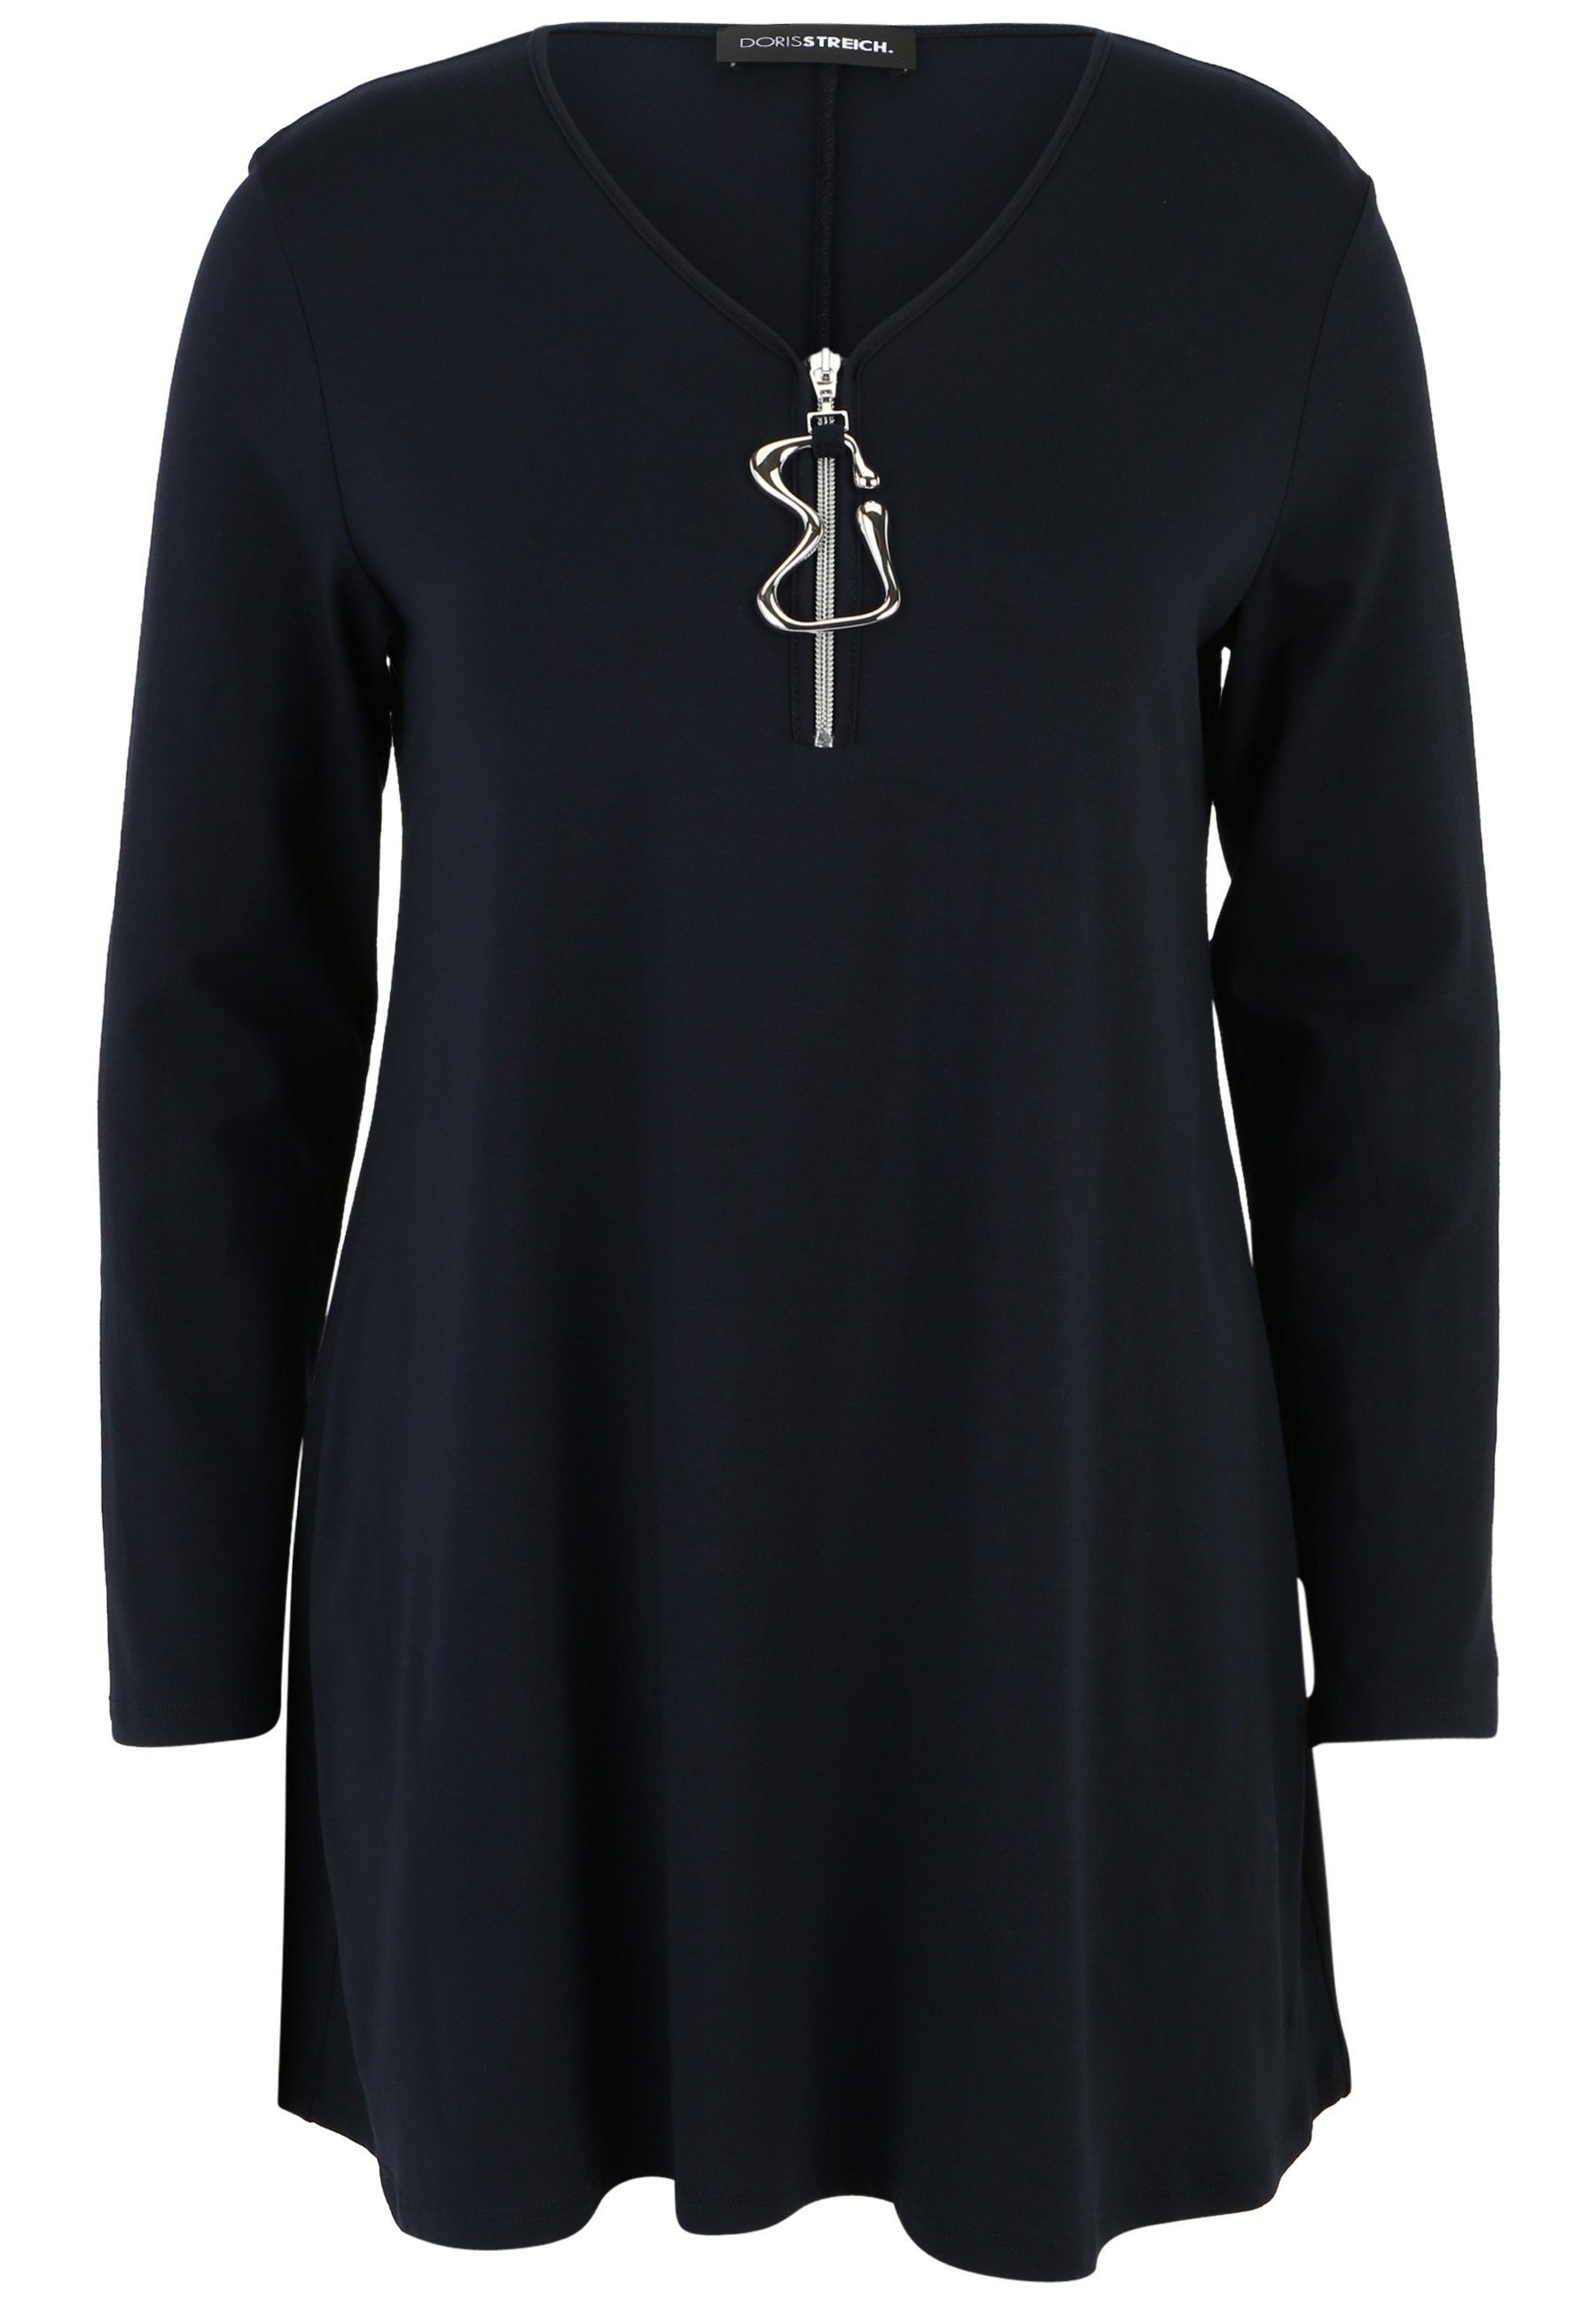 Doris Streich Longbluse Long-Shirt mit dekorativem Reißverschluss mit modernem Design ultramarinblau